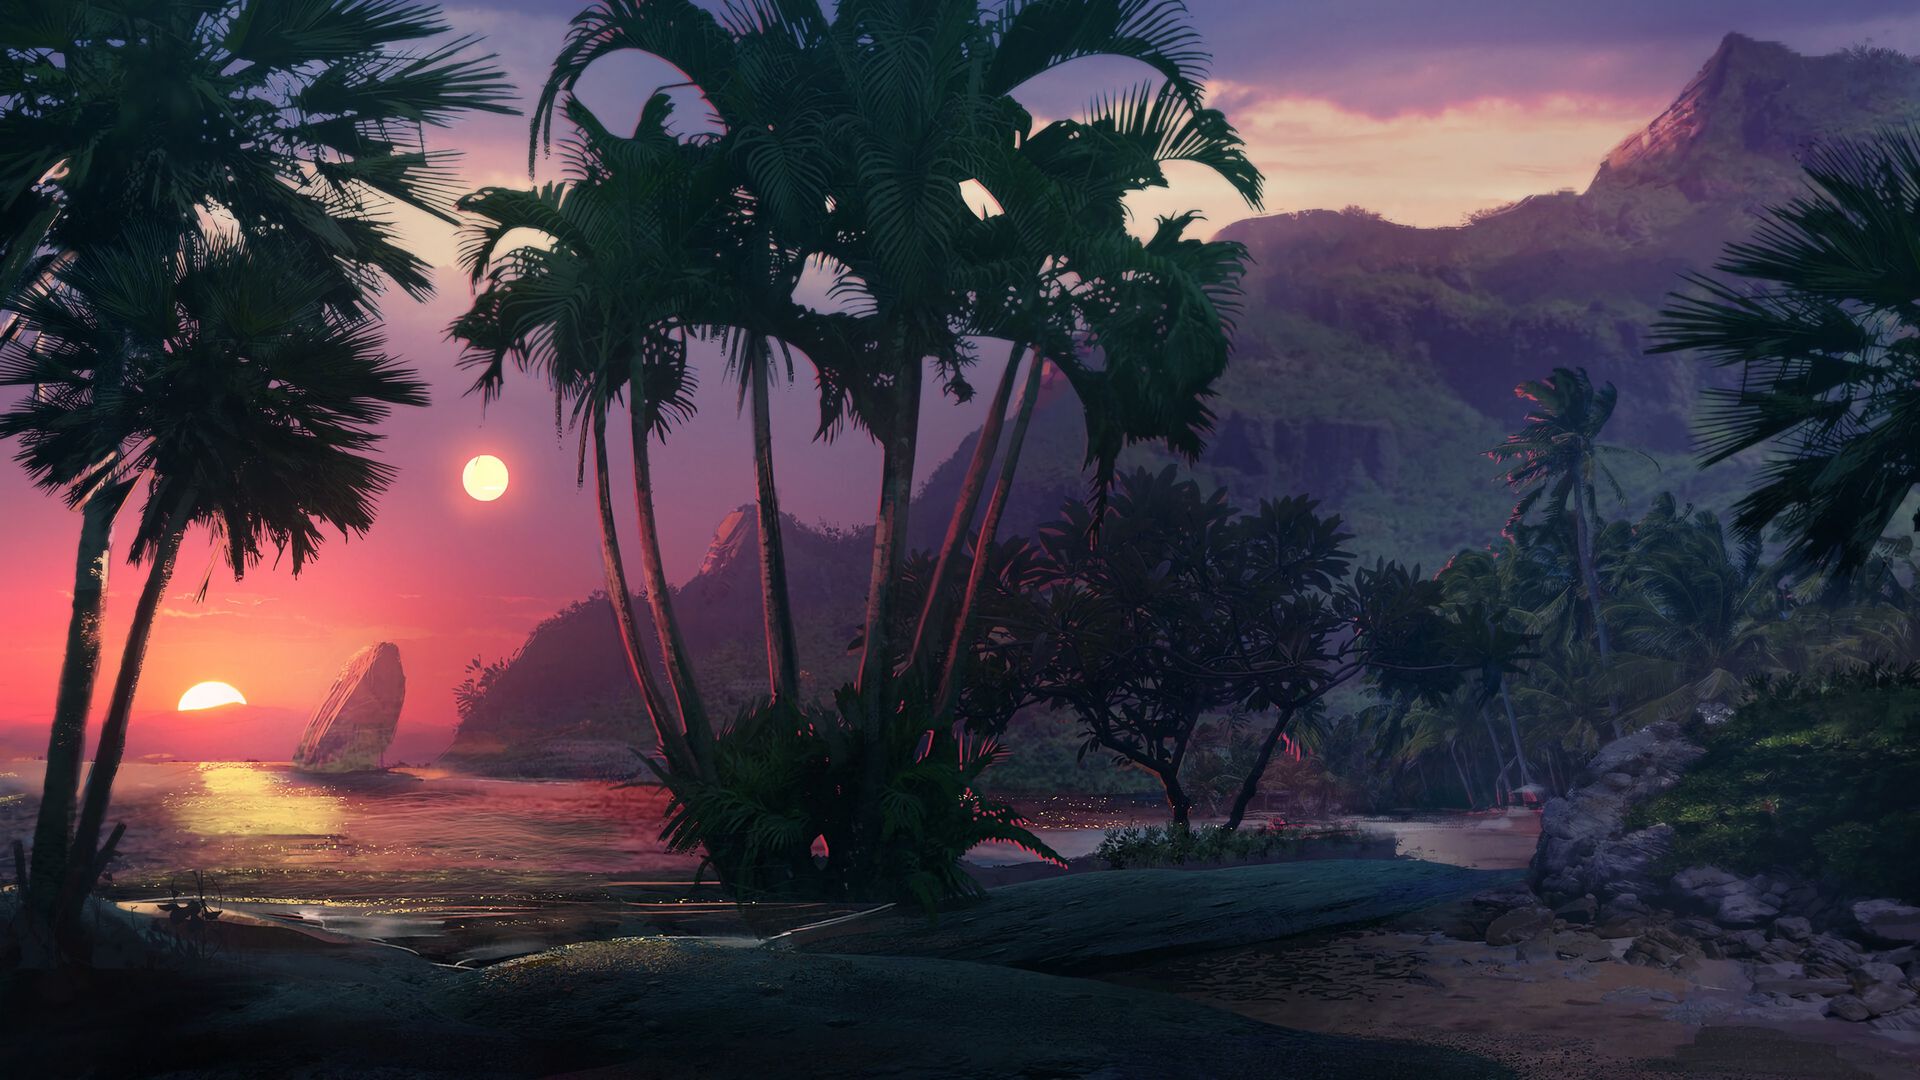 Download wallpaper 1920x1080 sunset, beach, palm trees, sea, art full hd, hdtv, fhd, 1080p HD background